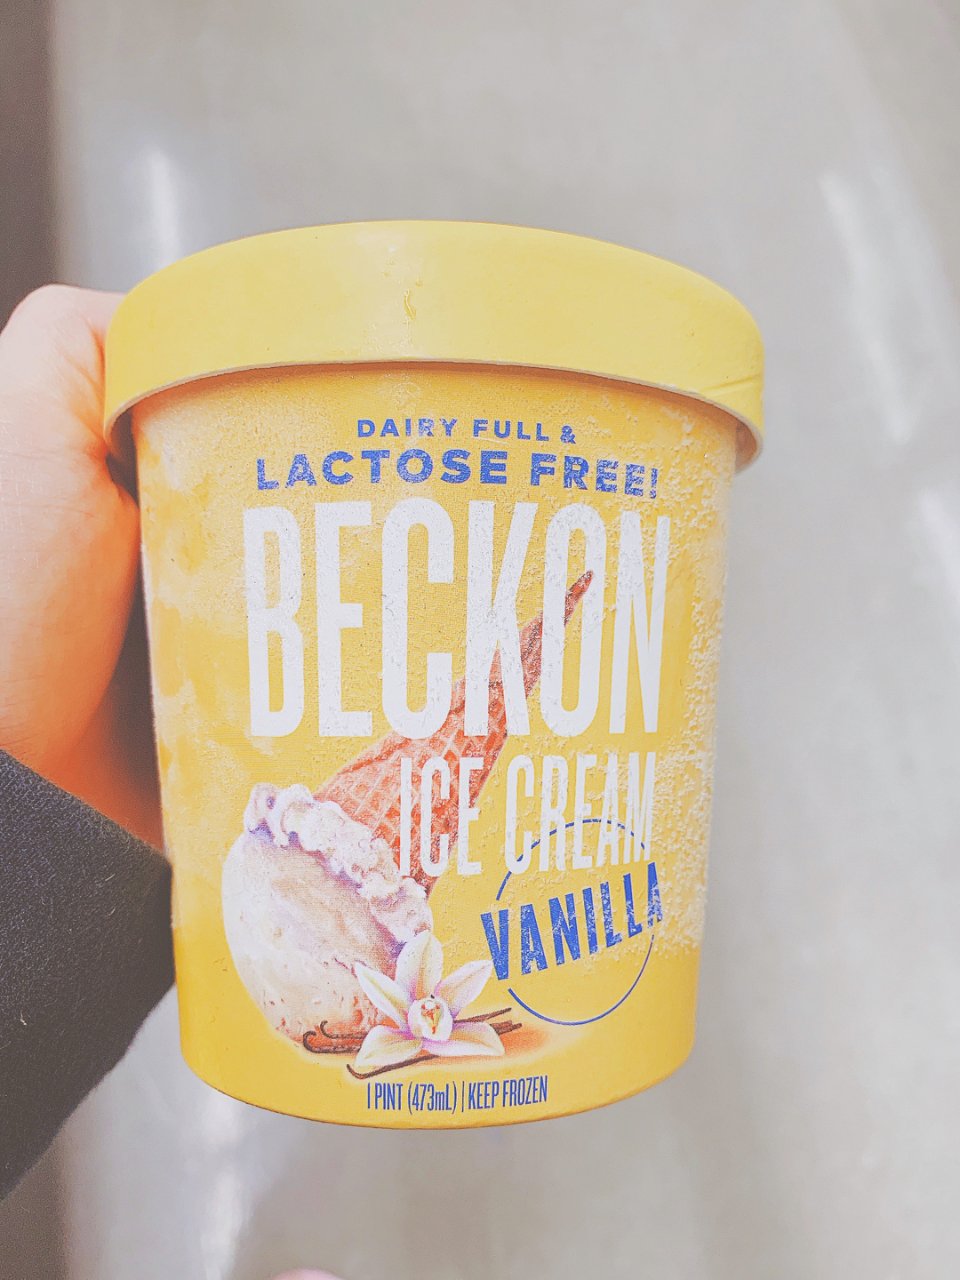 beckon ice cream,Whole Foods,Lactose Free,超好吃小零食